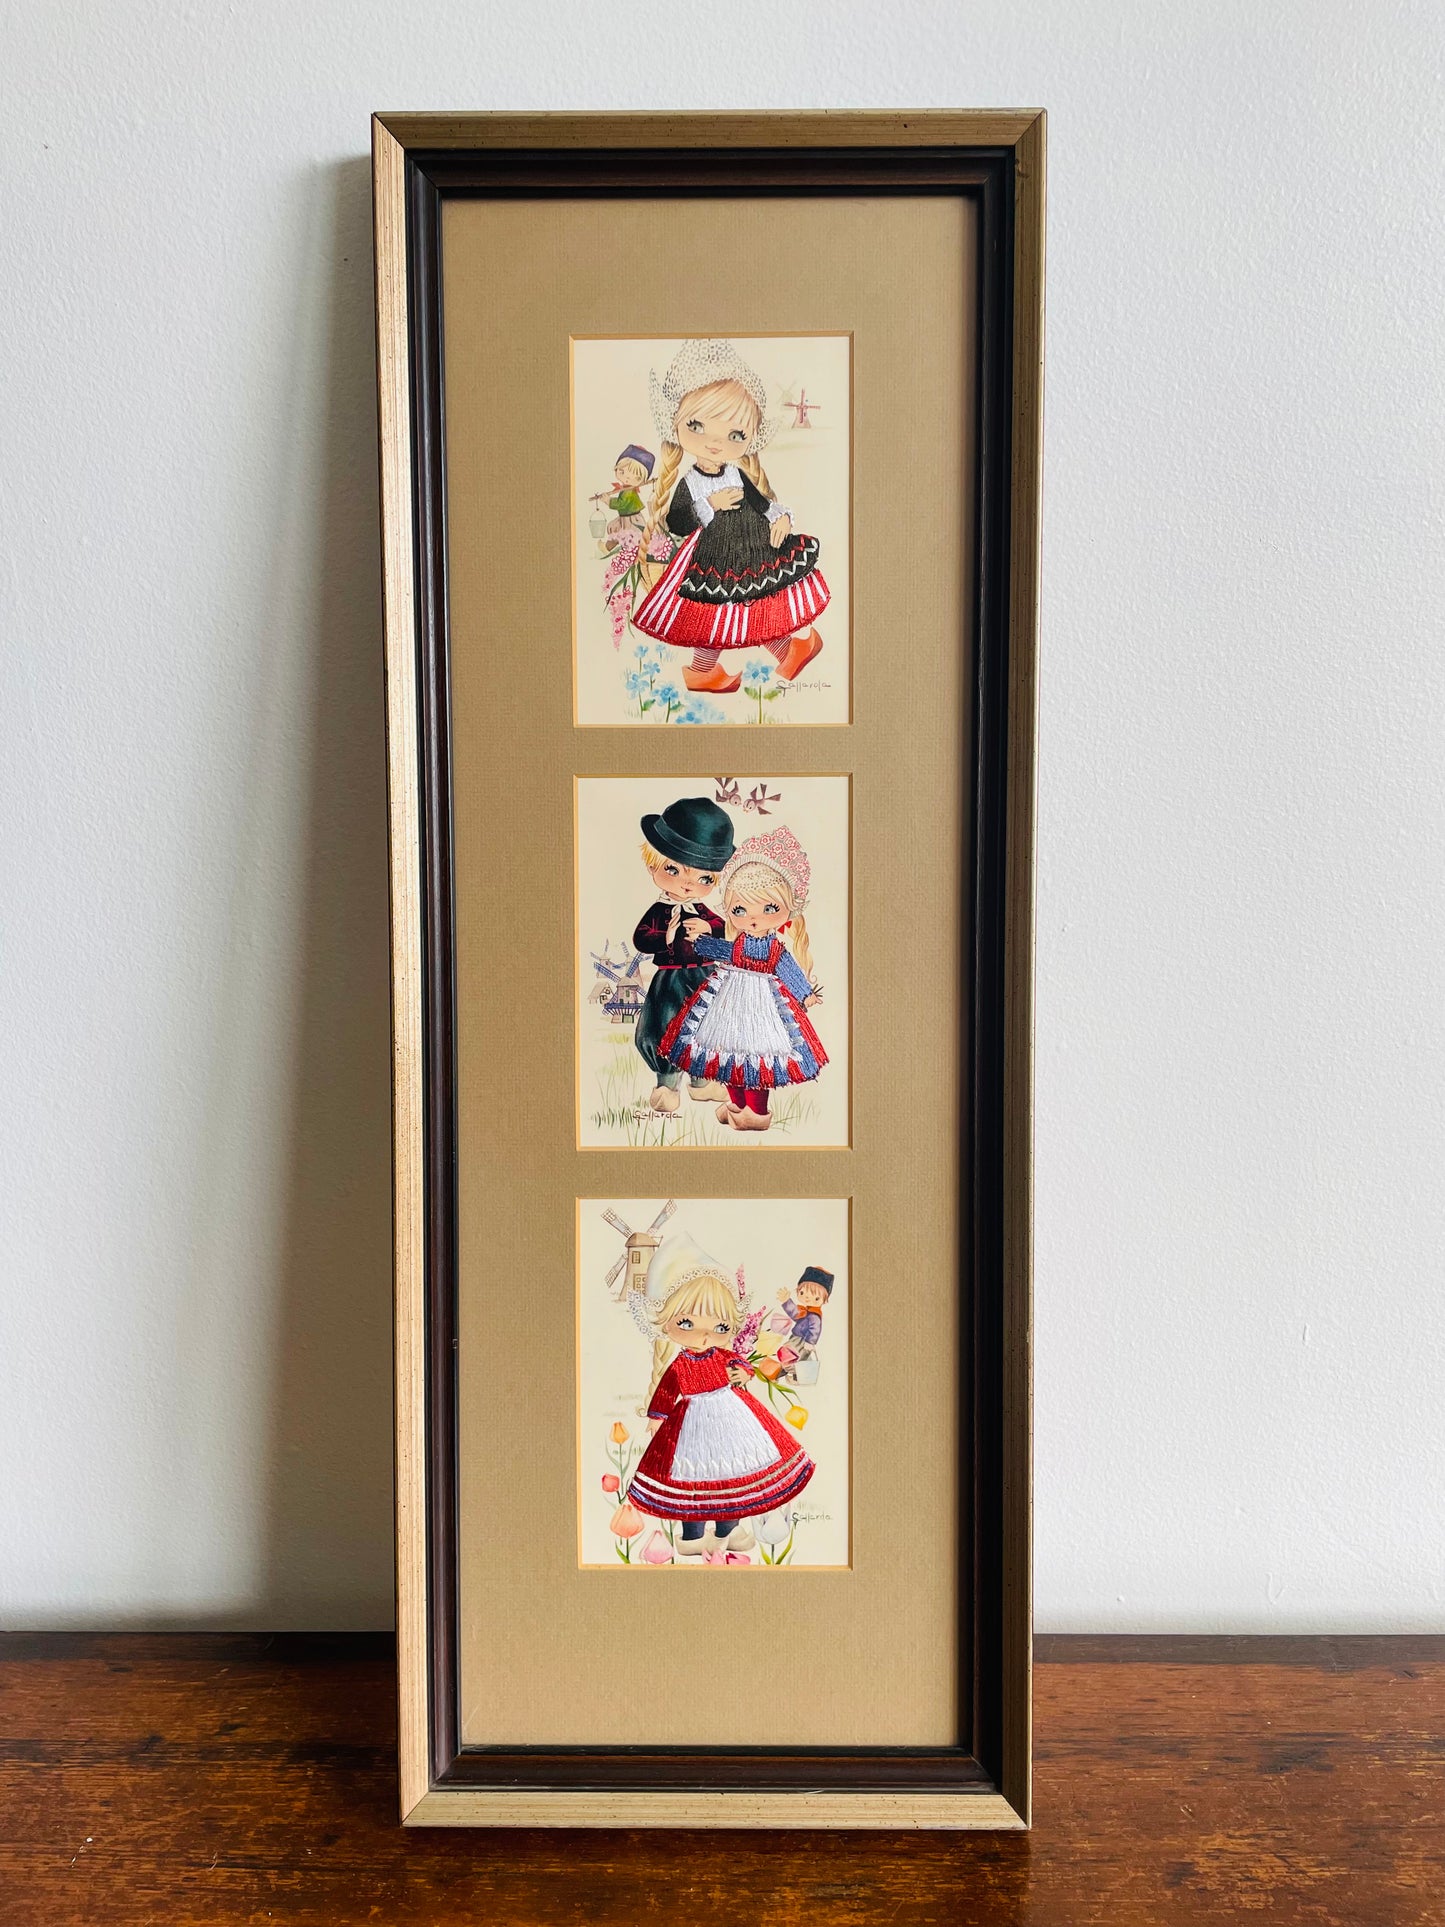 Vintage Fallarda Framed Prints with Embroidery Details - Dutch Children